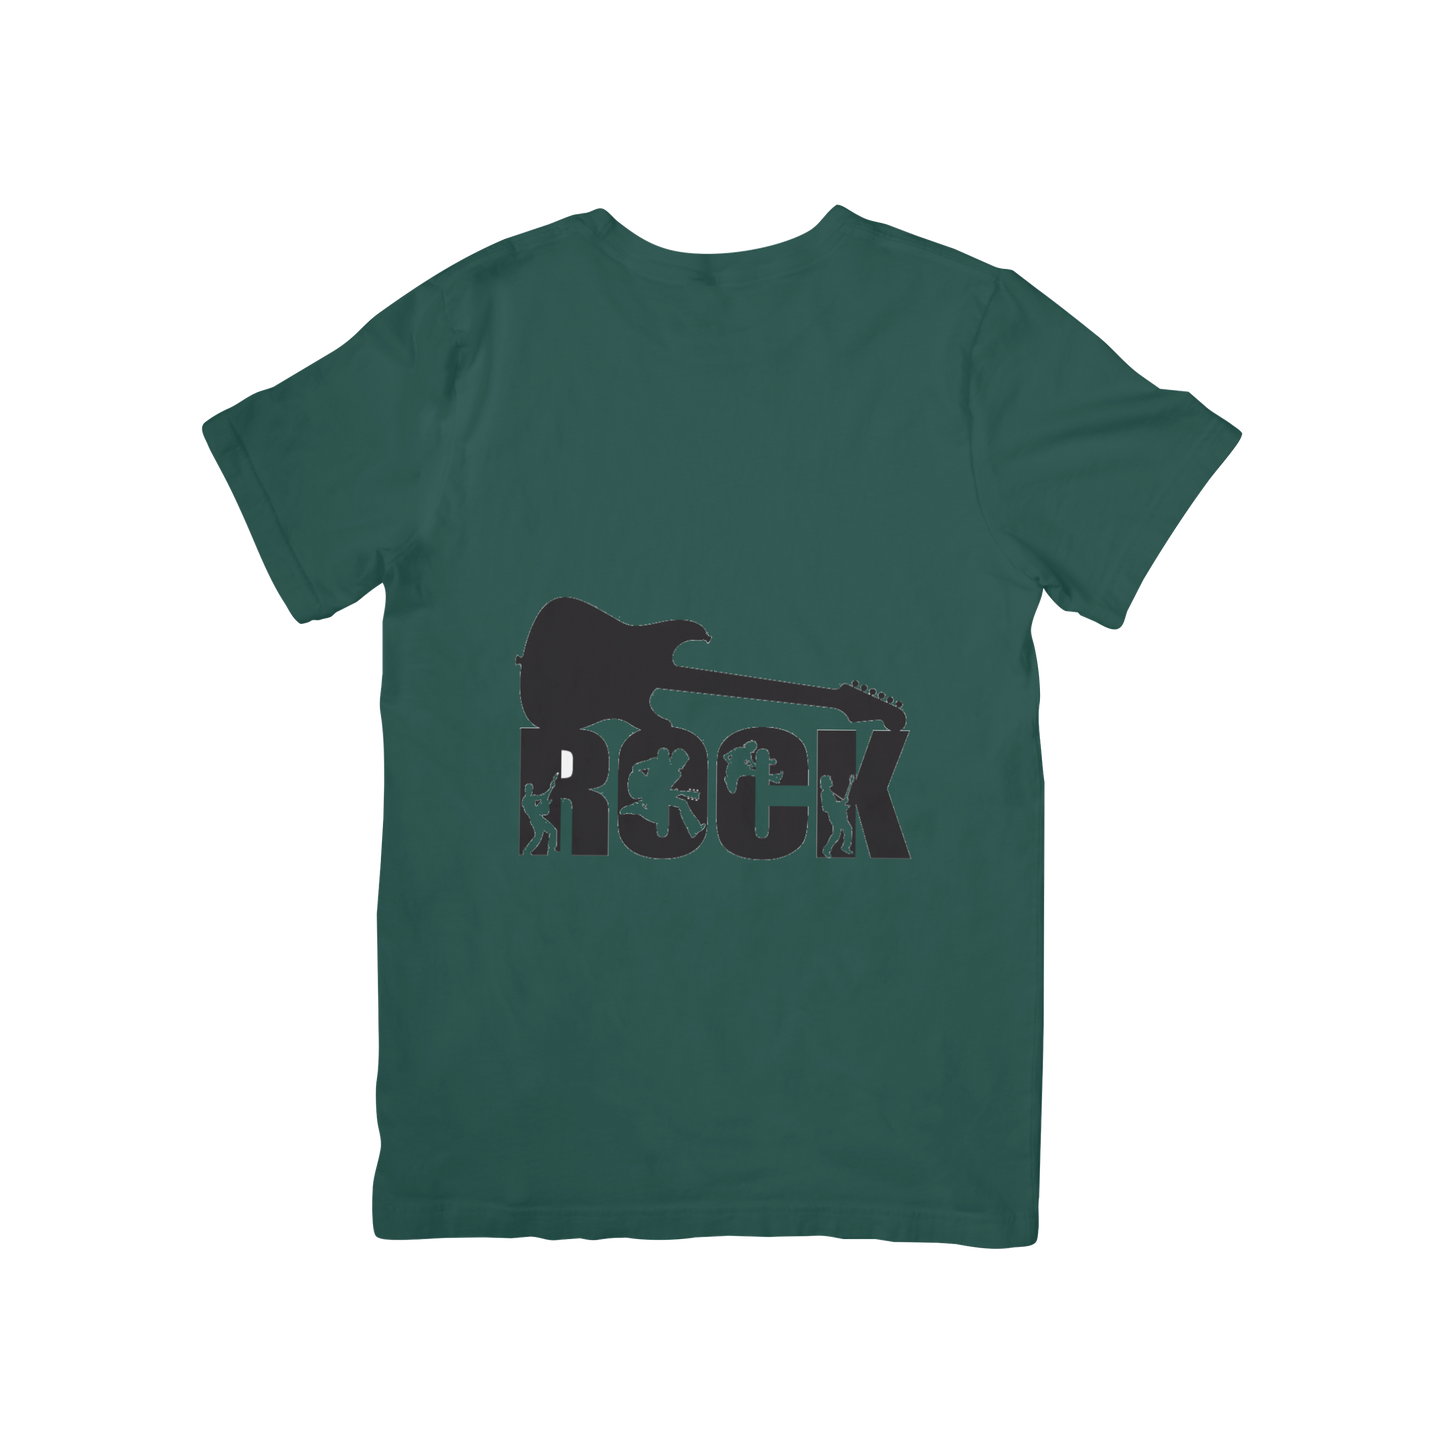 "Rock Guitar" Design T shirt